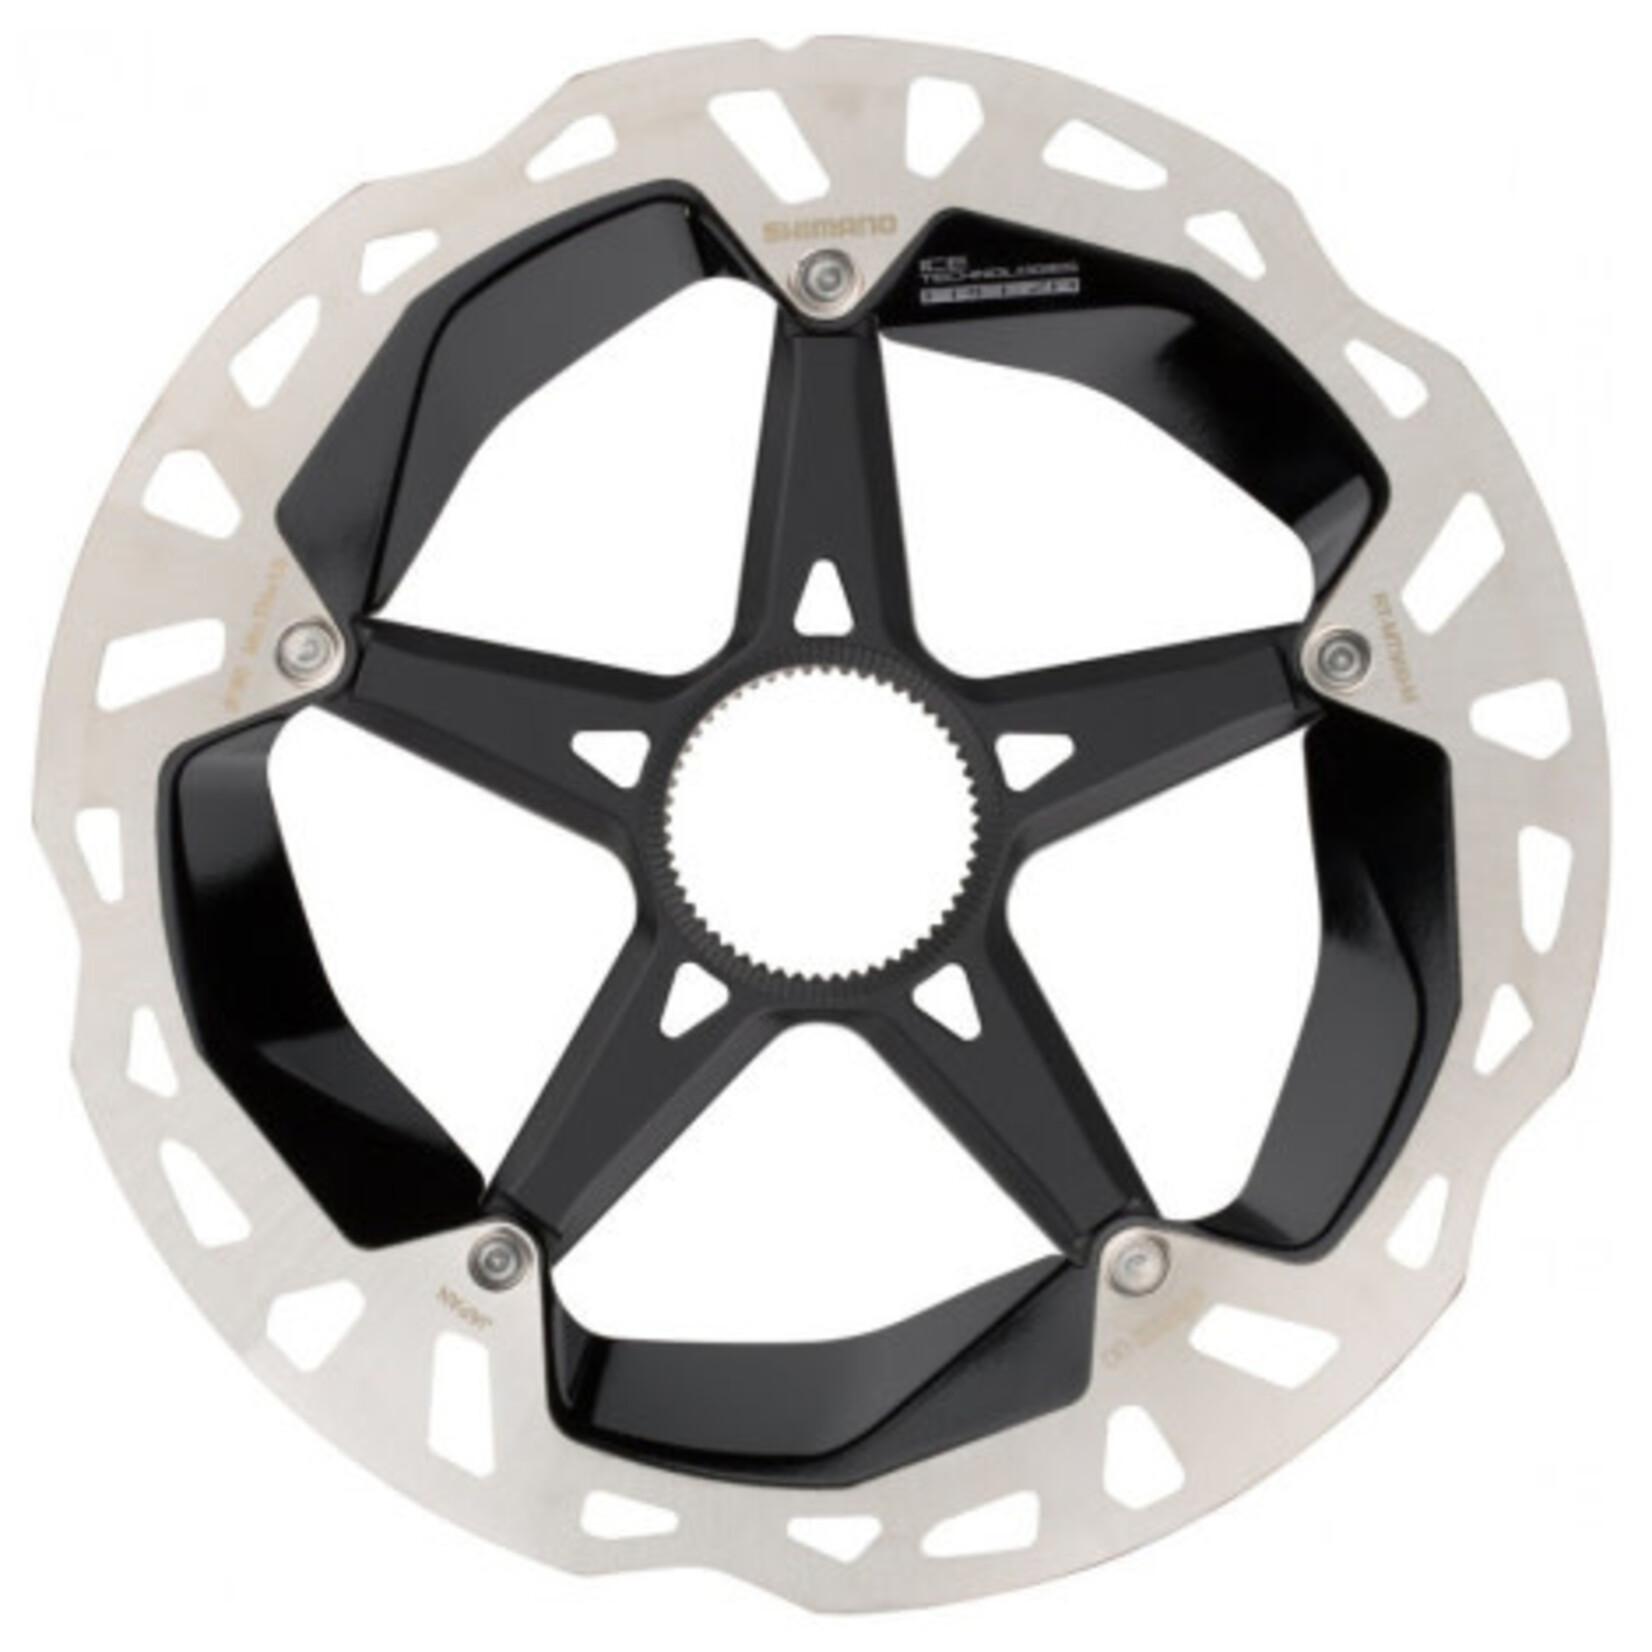 Shimano XTR Shimano RT-MT900 disc rotor with internal lockring, Ice Tech FREEZA, 180 mm